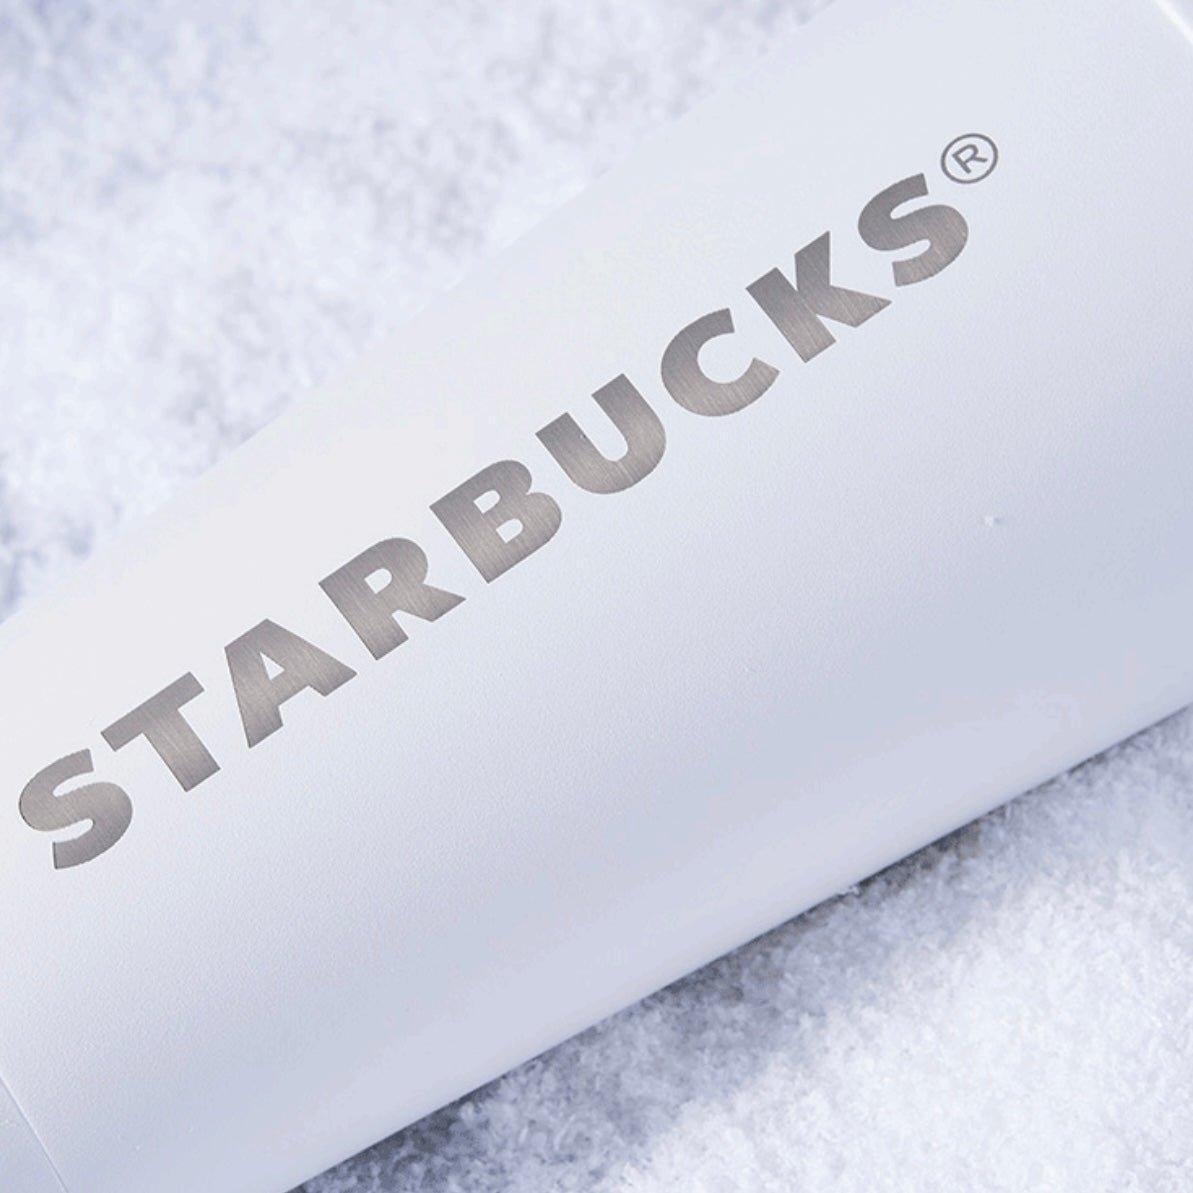 Starbucks 500ml/17oz Blue White Travelling Cup with Logo - Ann Ann Starbucks